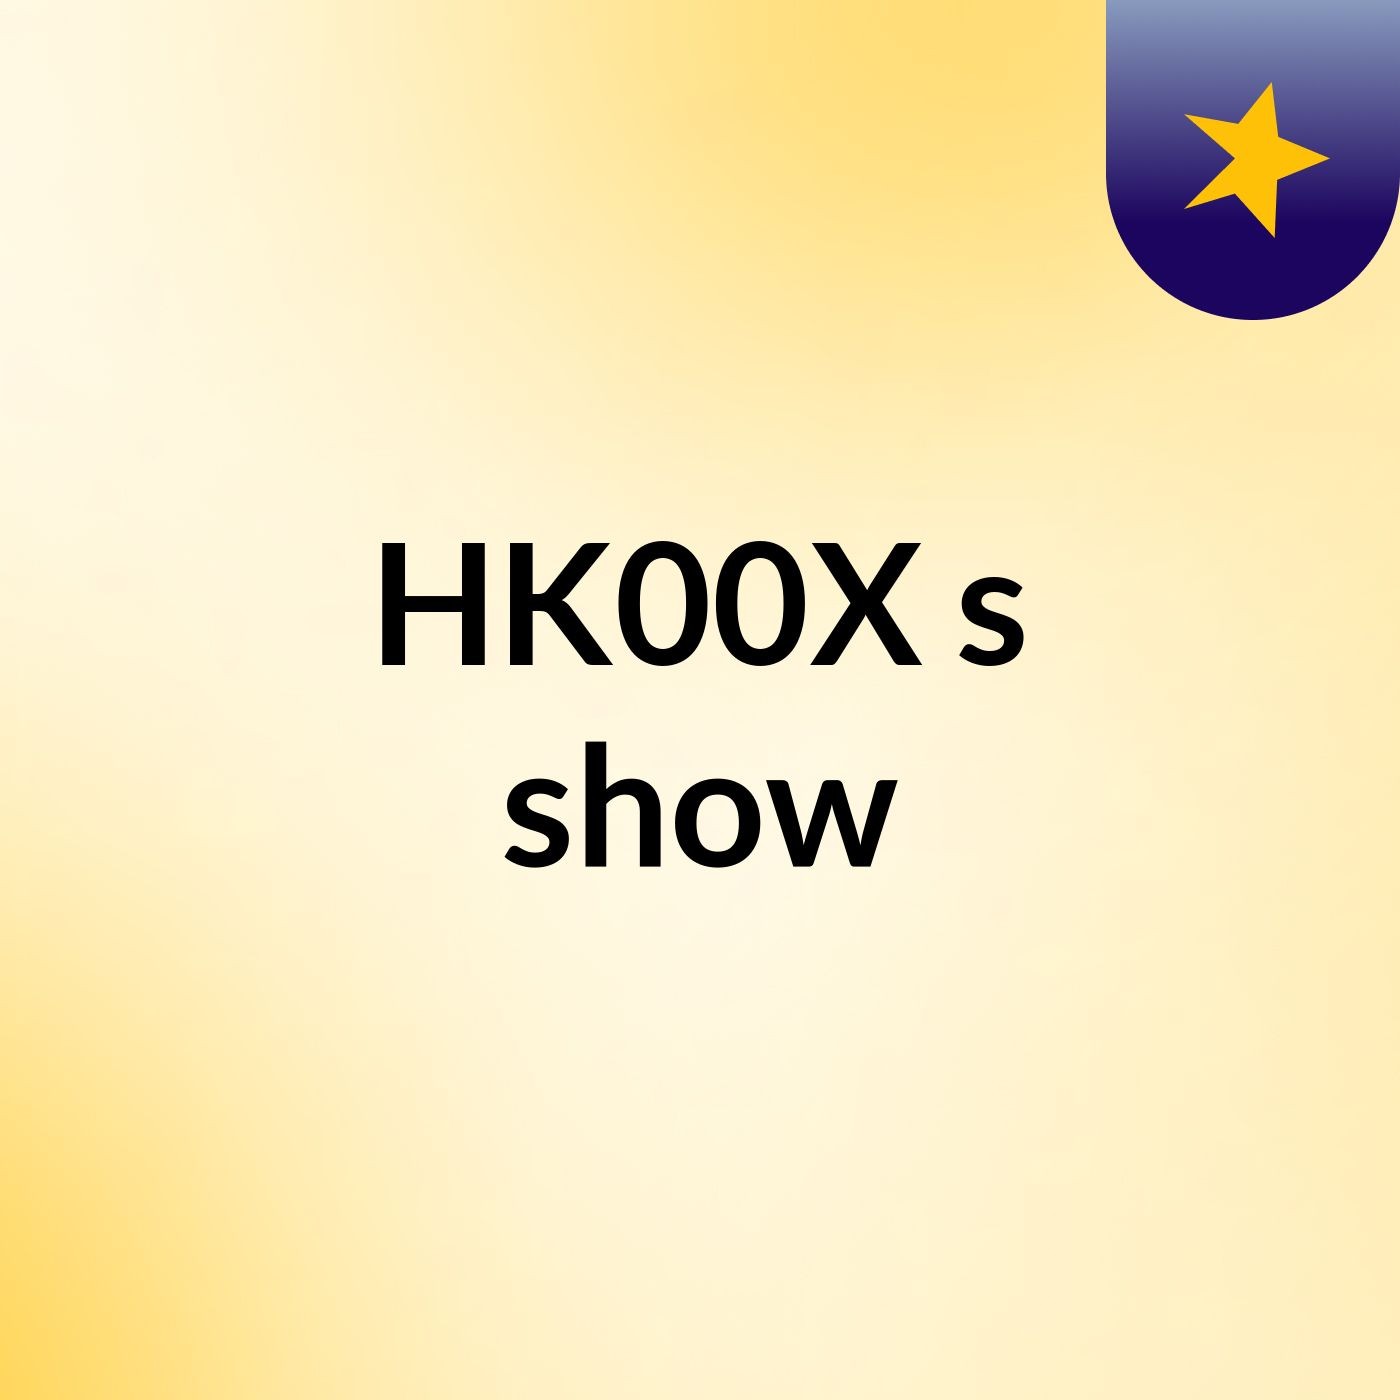 HK00X's show